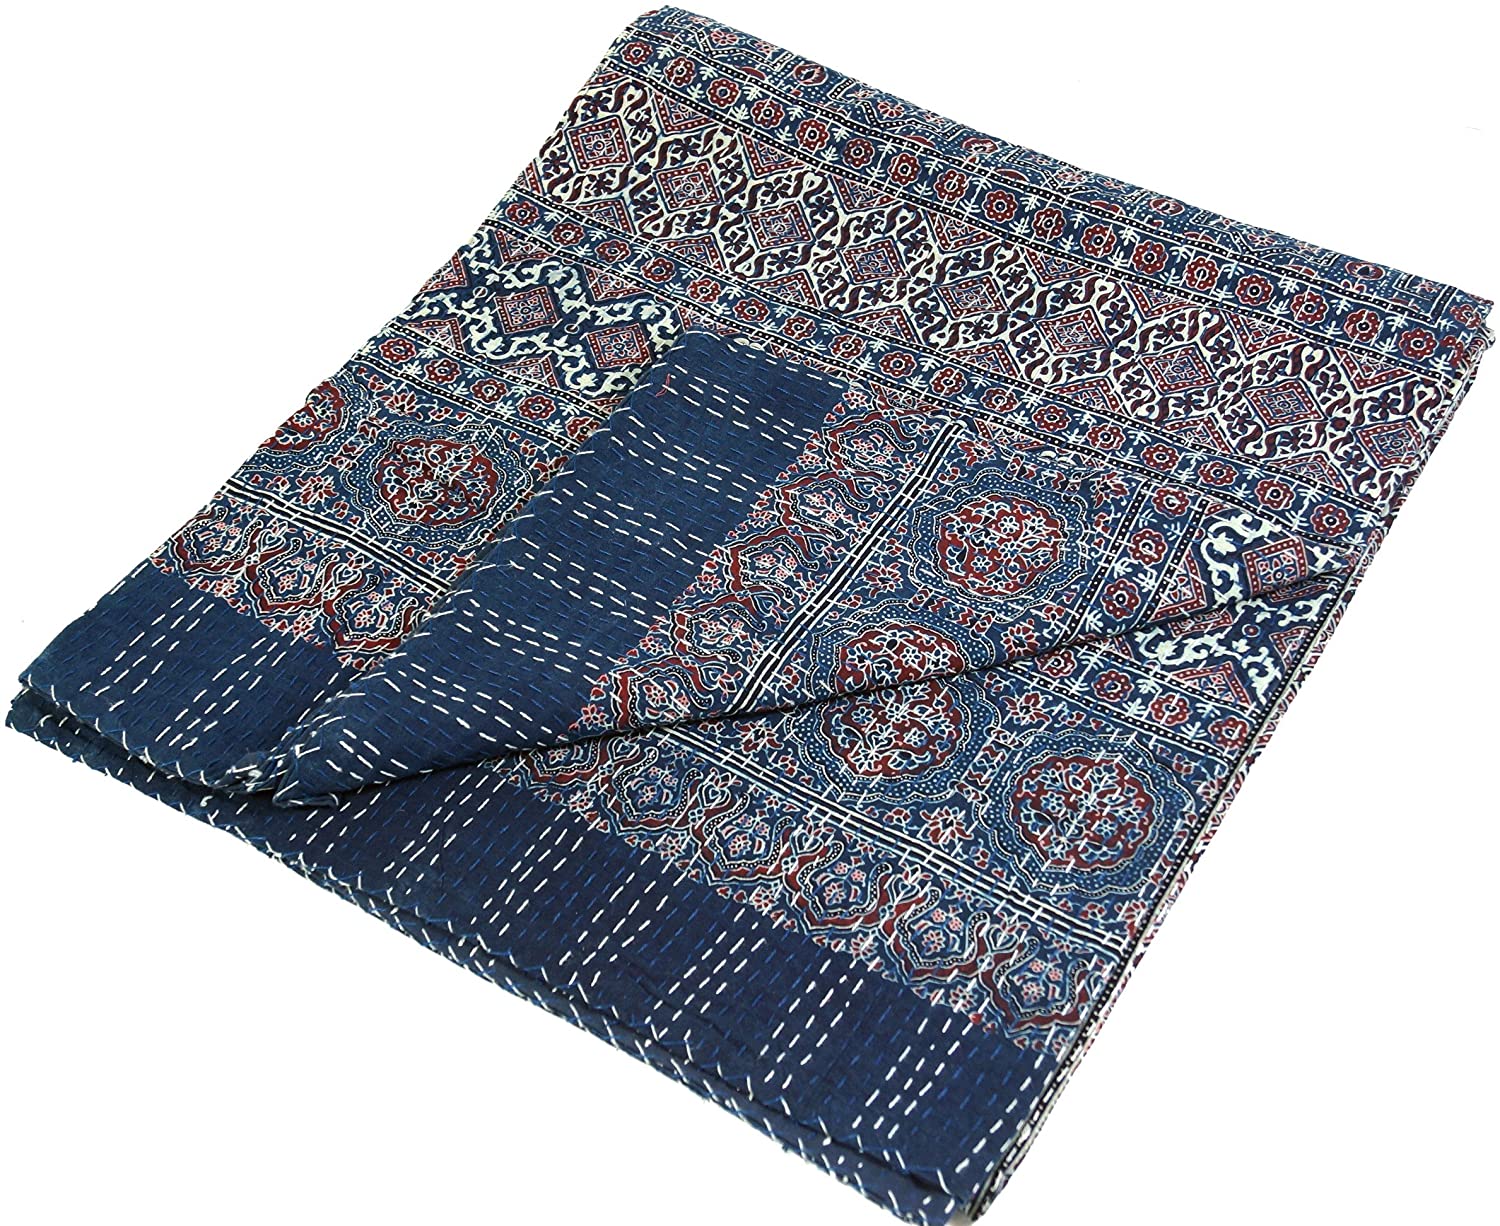 Guru-Shop Quilt, Bedspread, Bedspread Bed Throw, Embroidered Cloth, Indian 